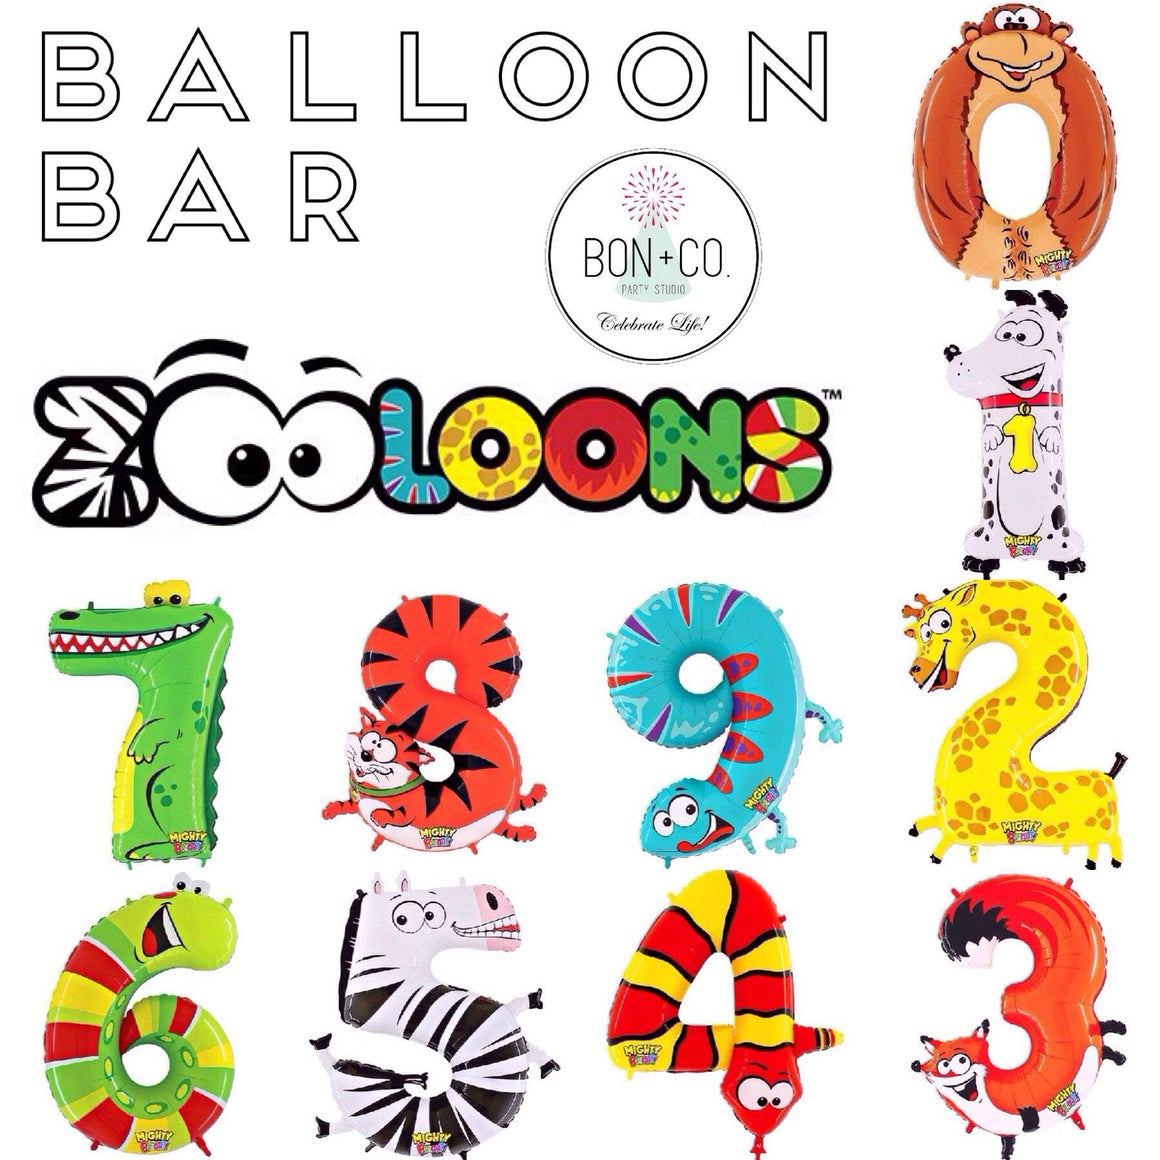 BALLOON BAR - 40" ZOOLOONS, Balloons, BETALLIC - Bon + Co. Party Studio